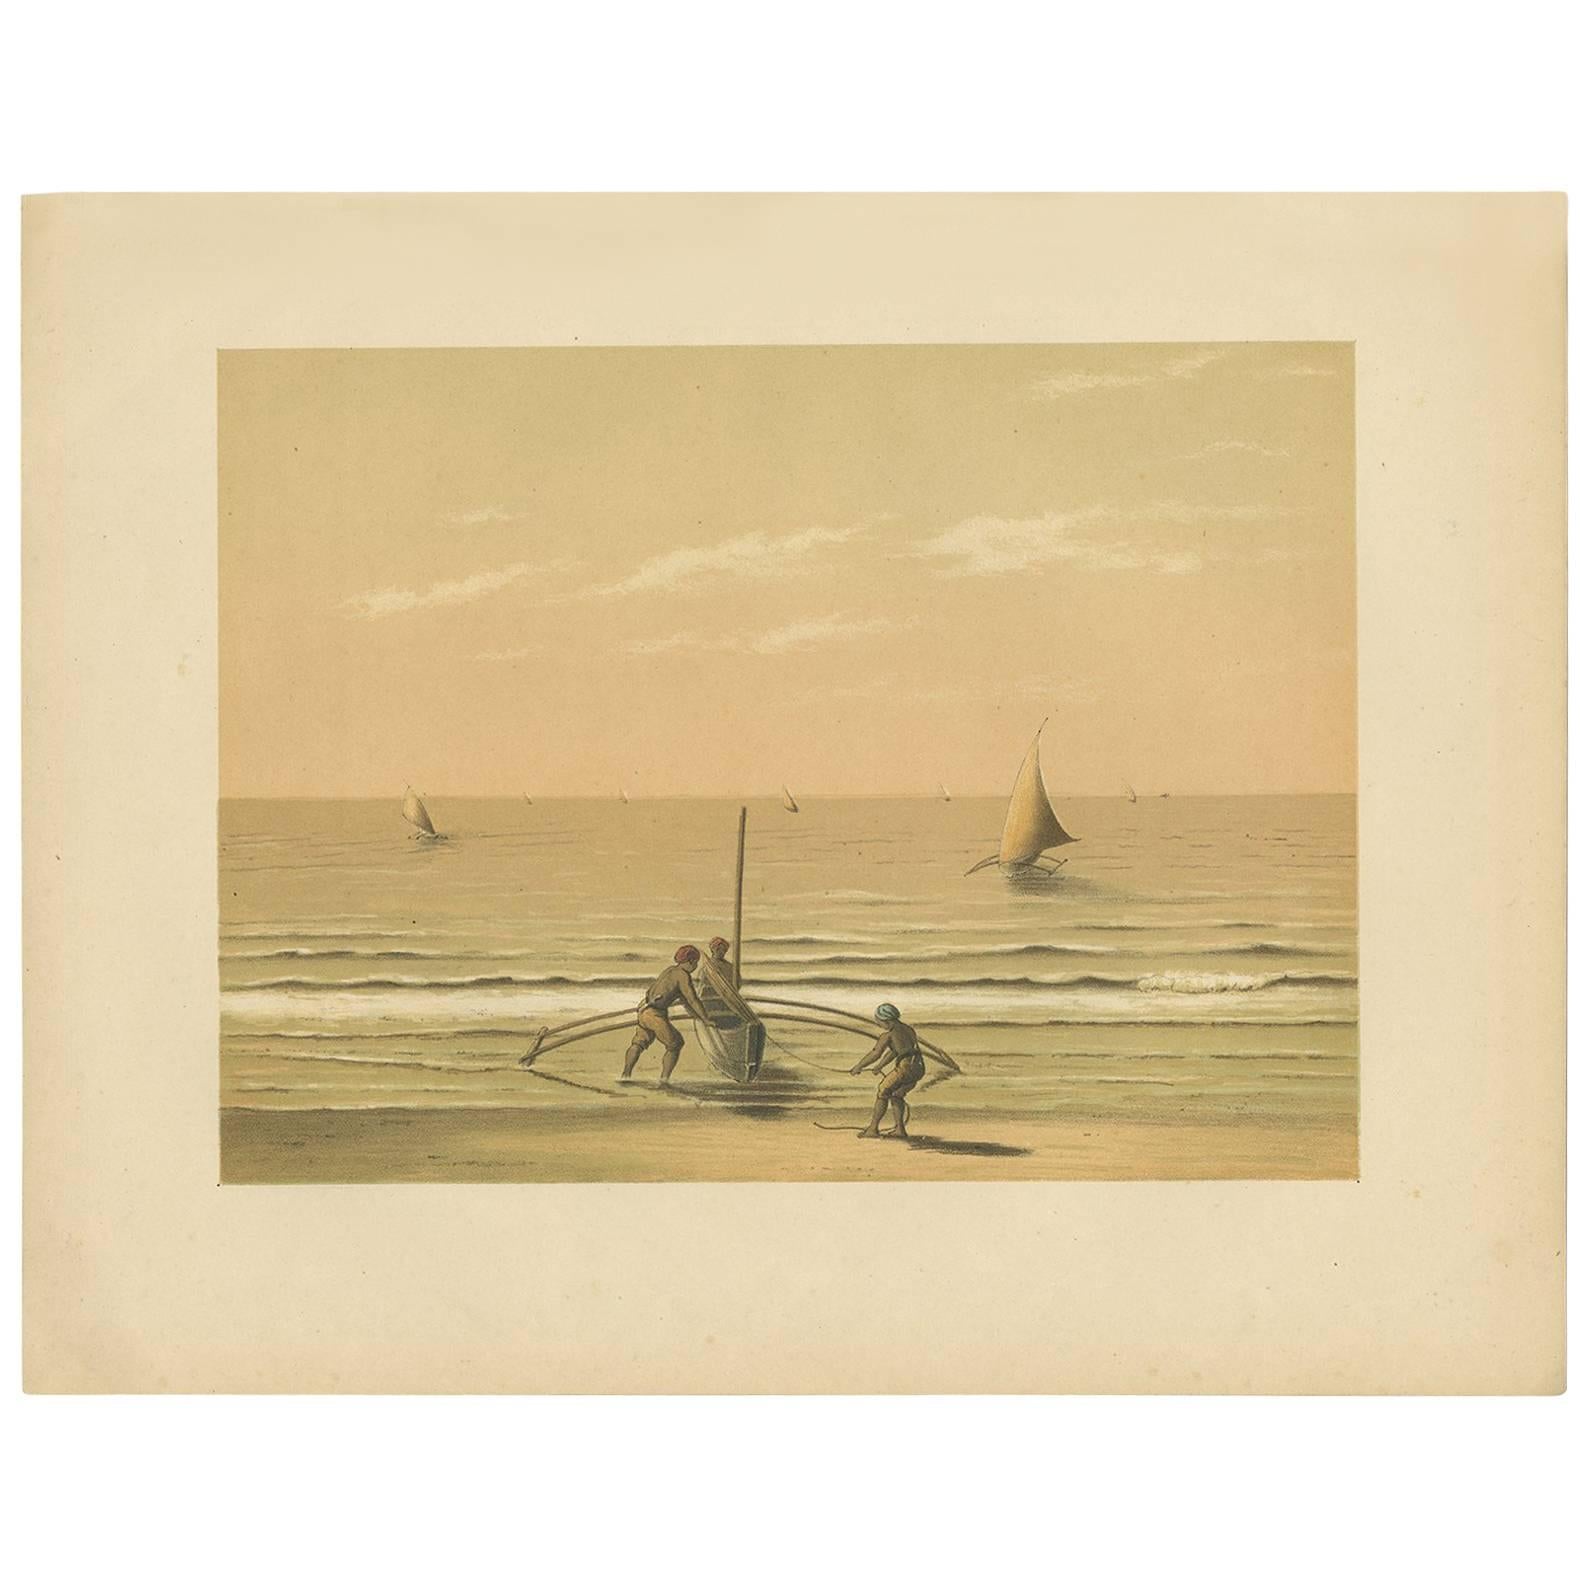 Antique Print of Local Vessels in the Sunda Strait in Indonesia, 1888